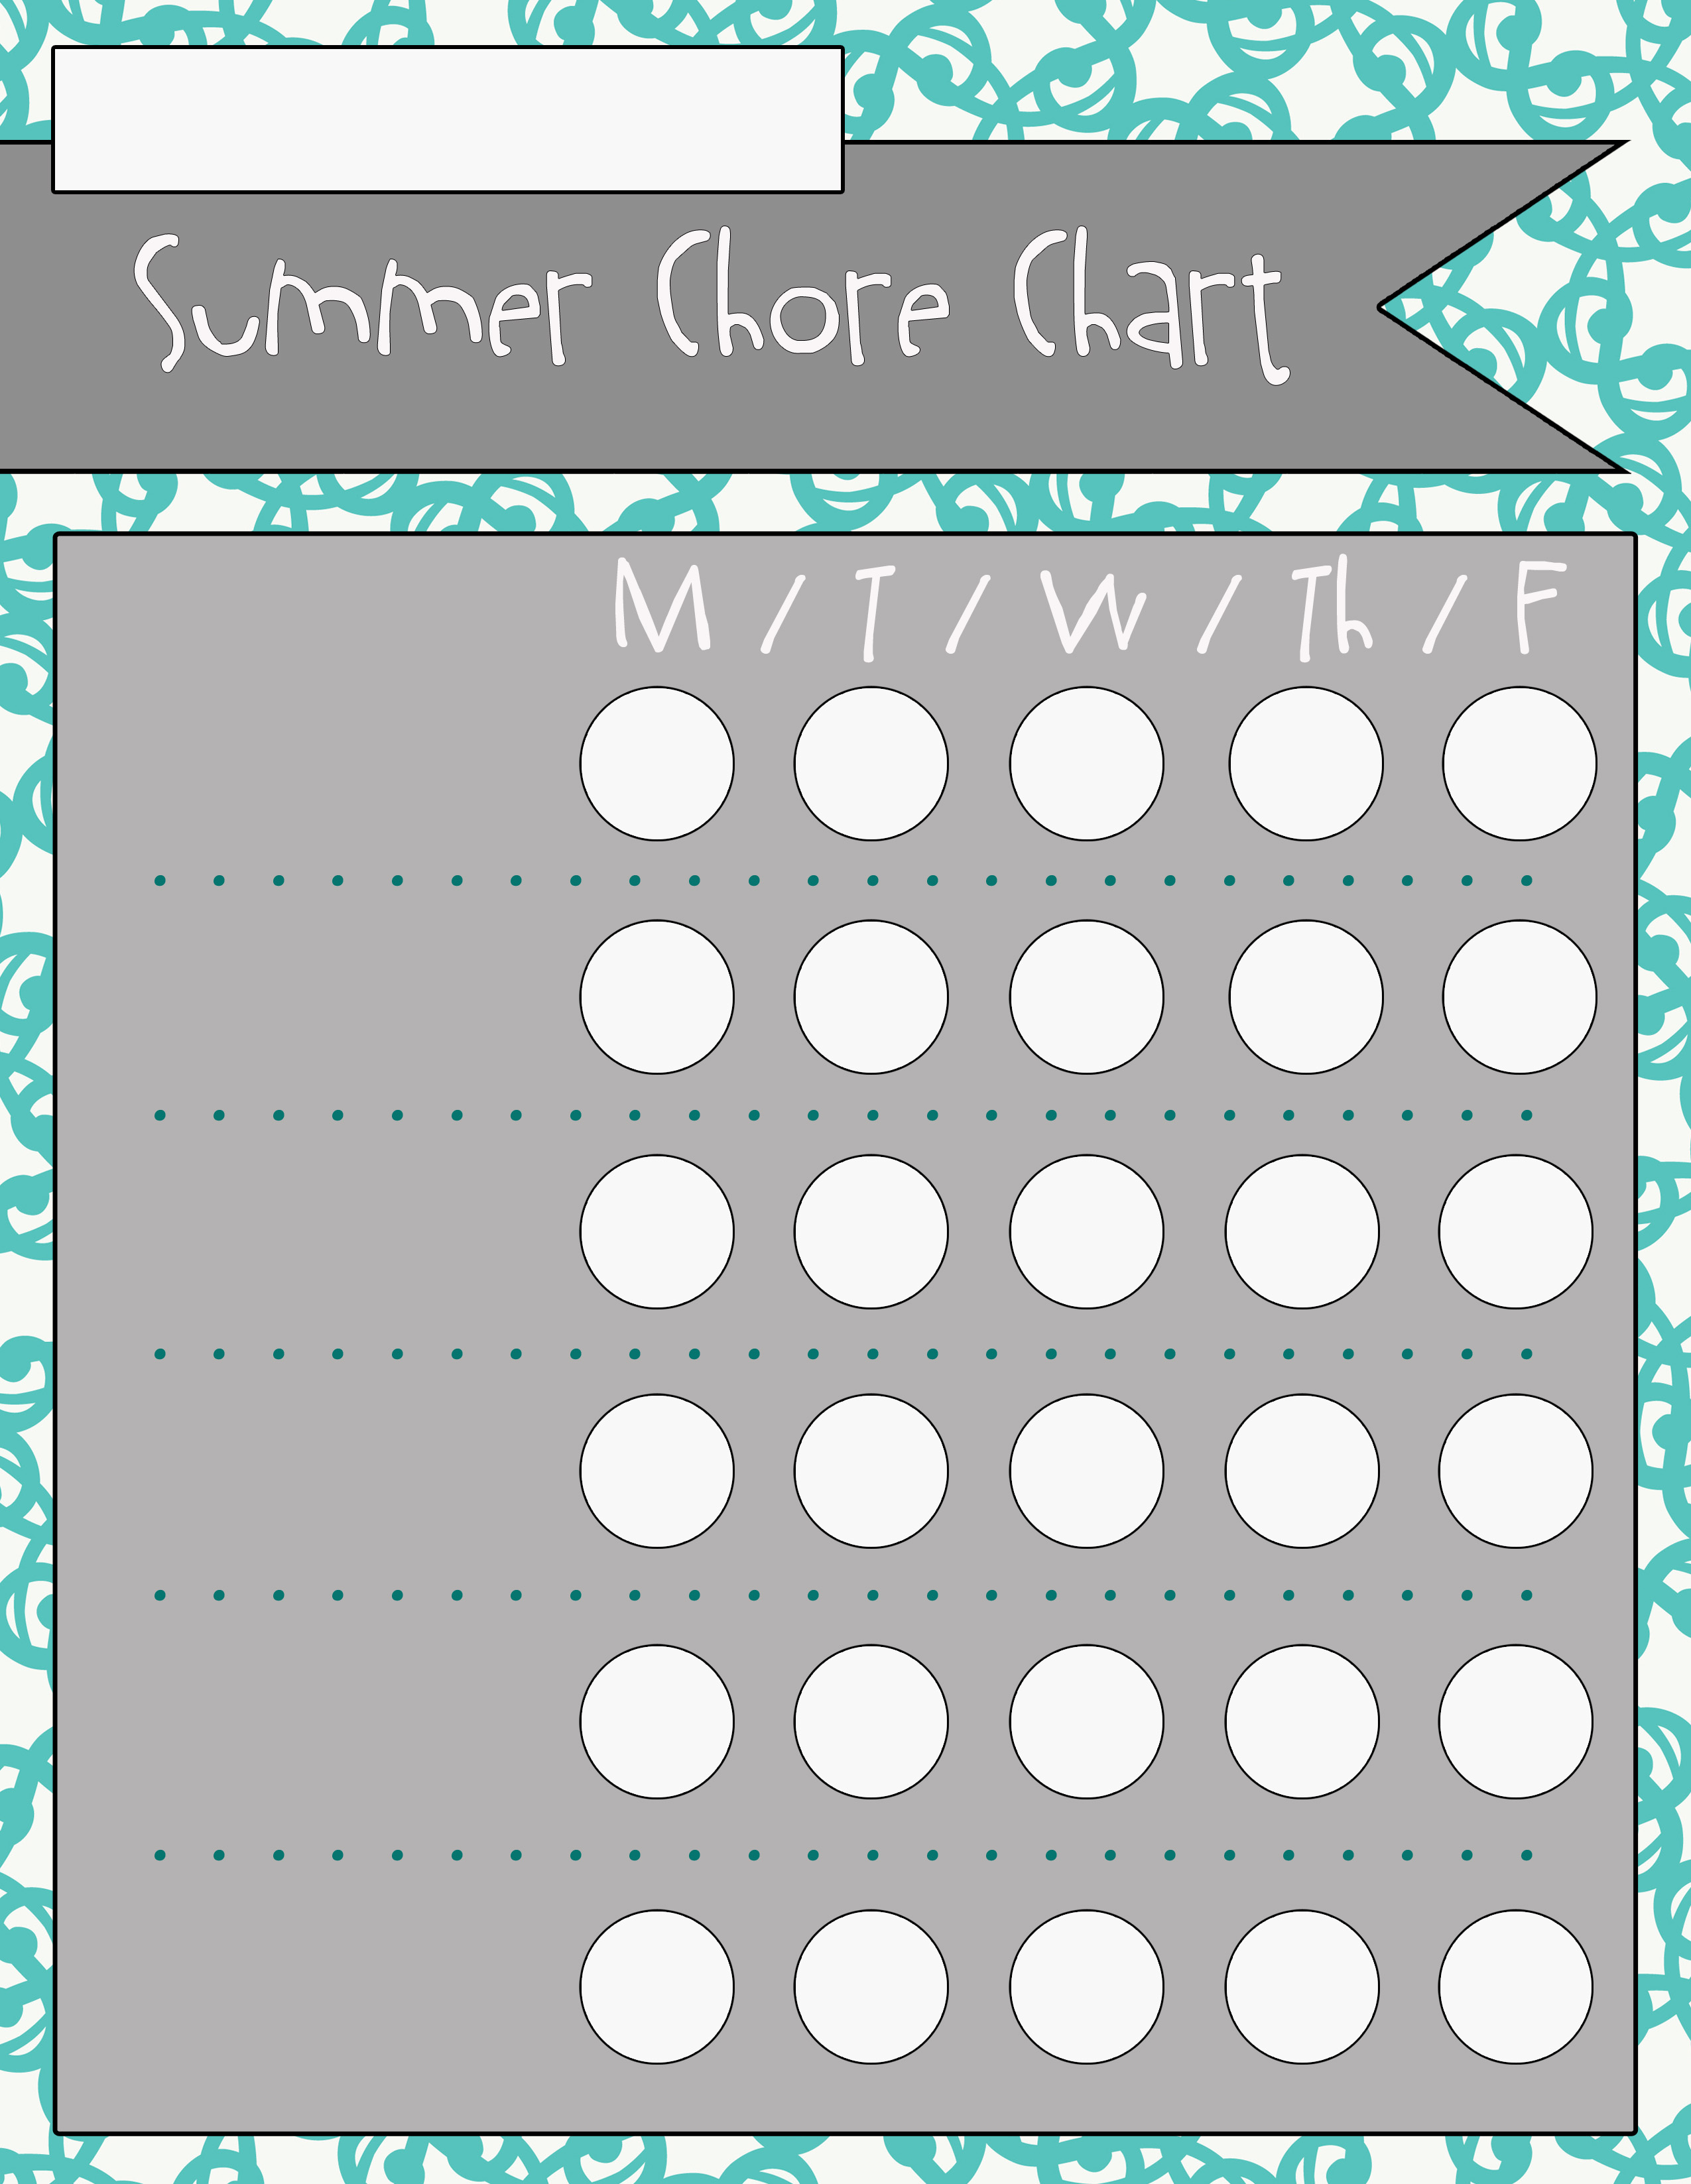 Boy Scout Chore Chart